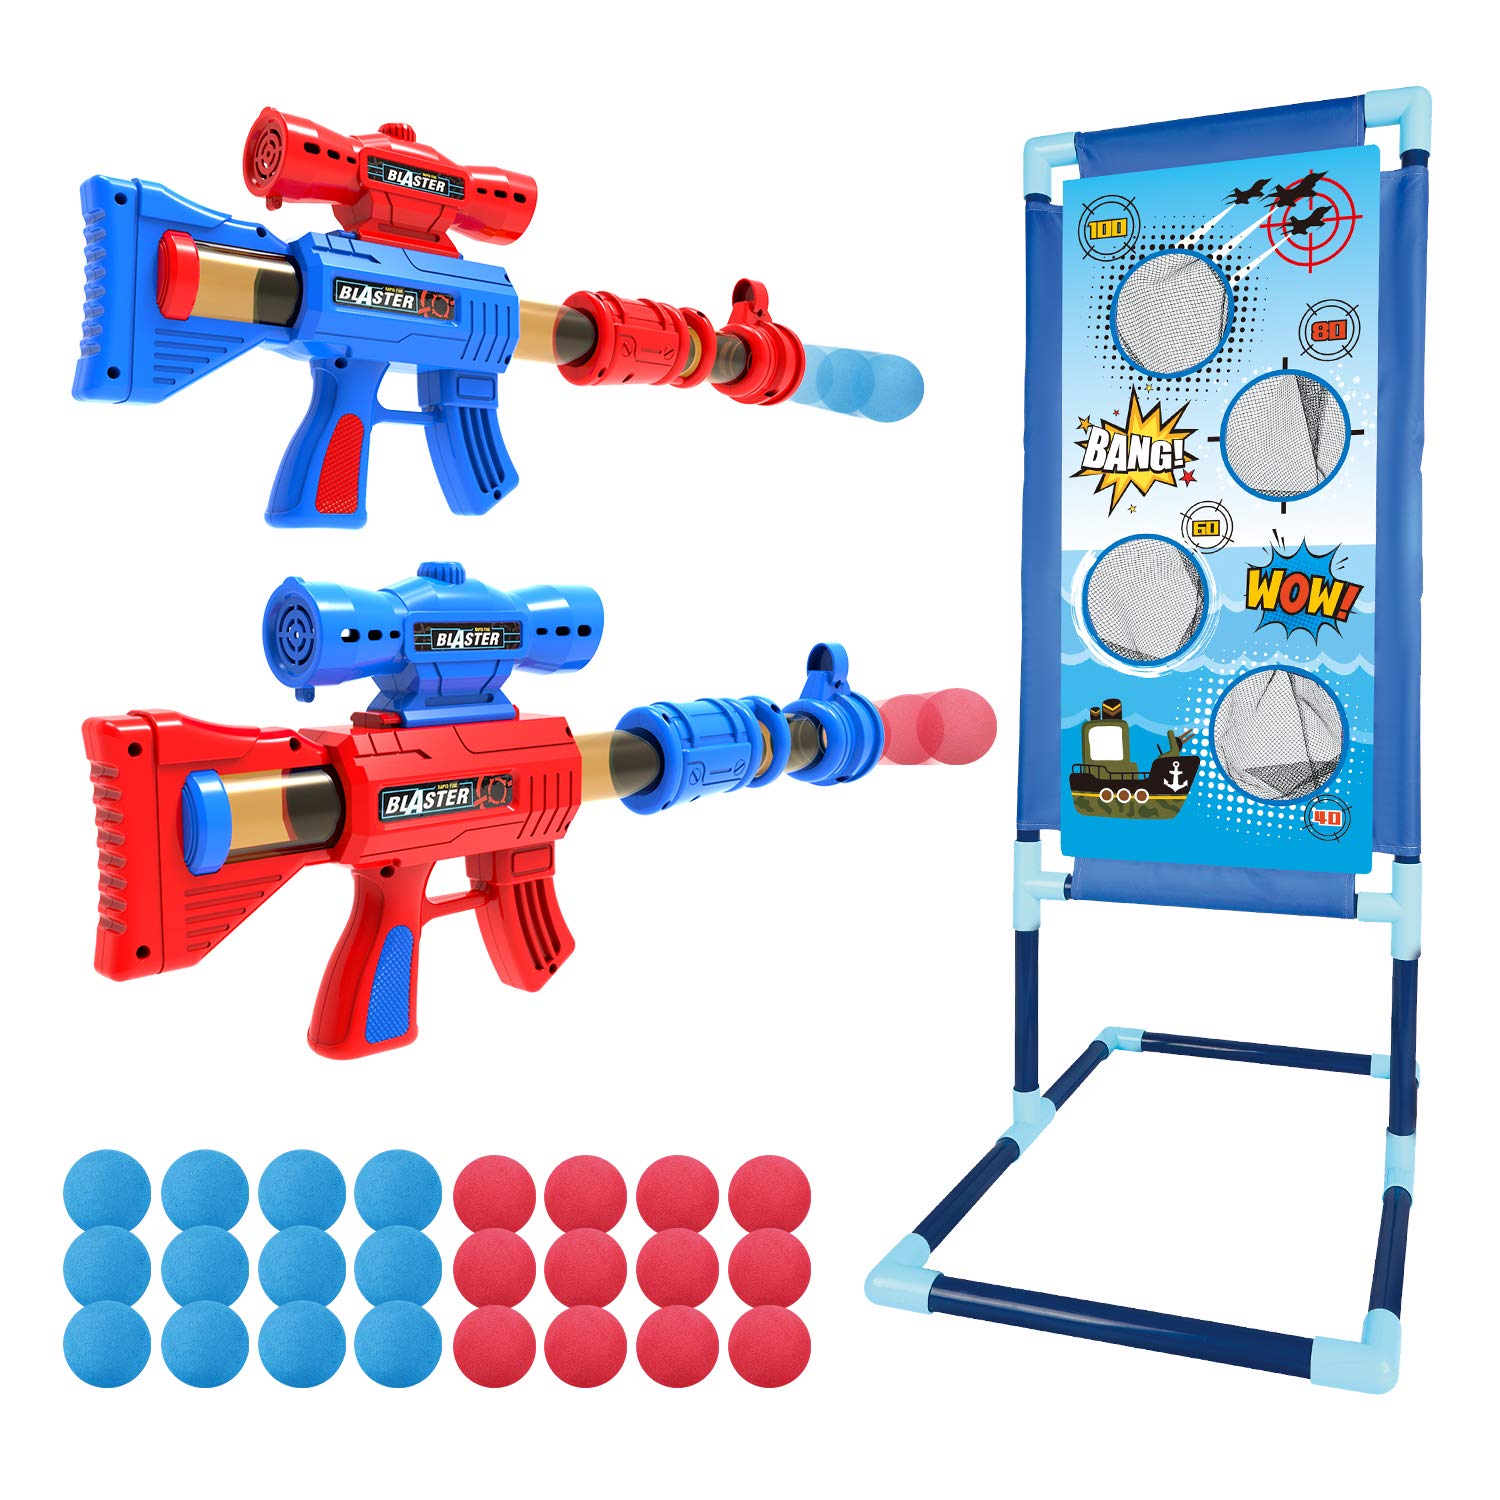 YEEBAY Shooting Game Toy